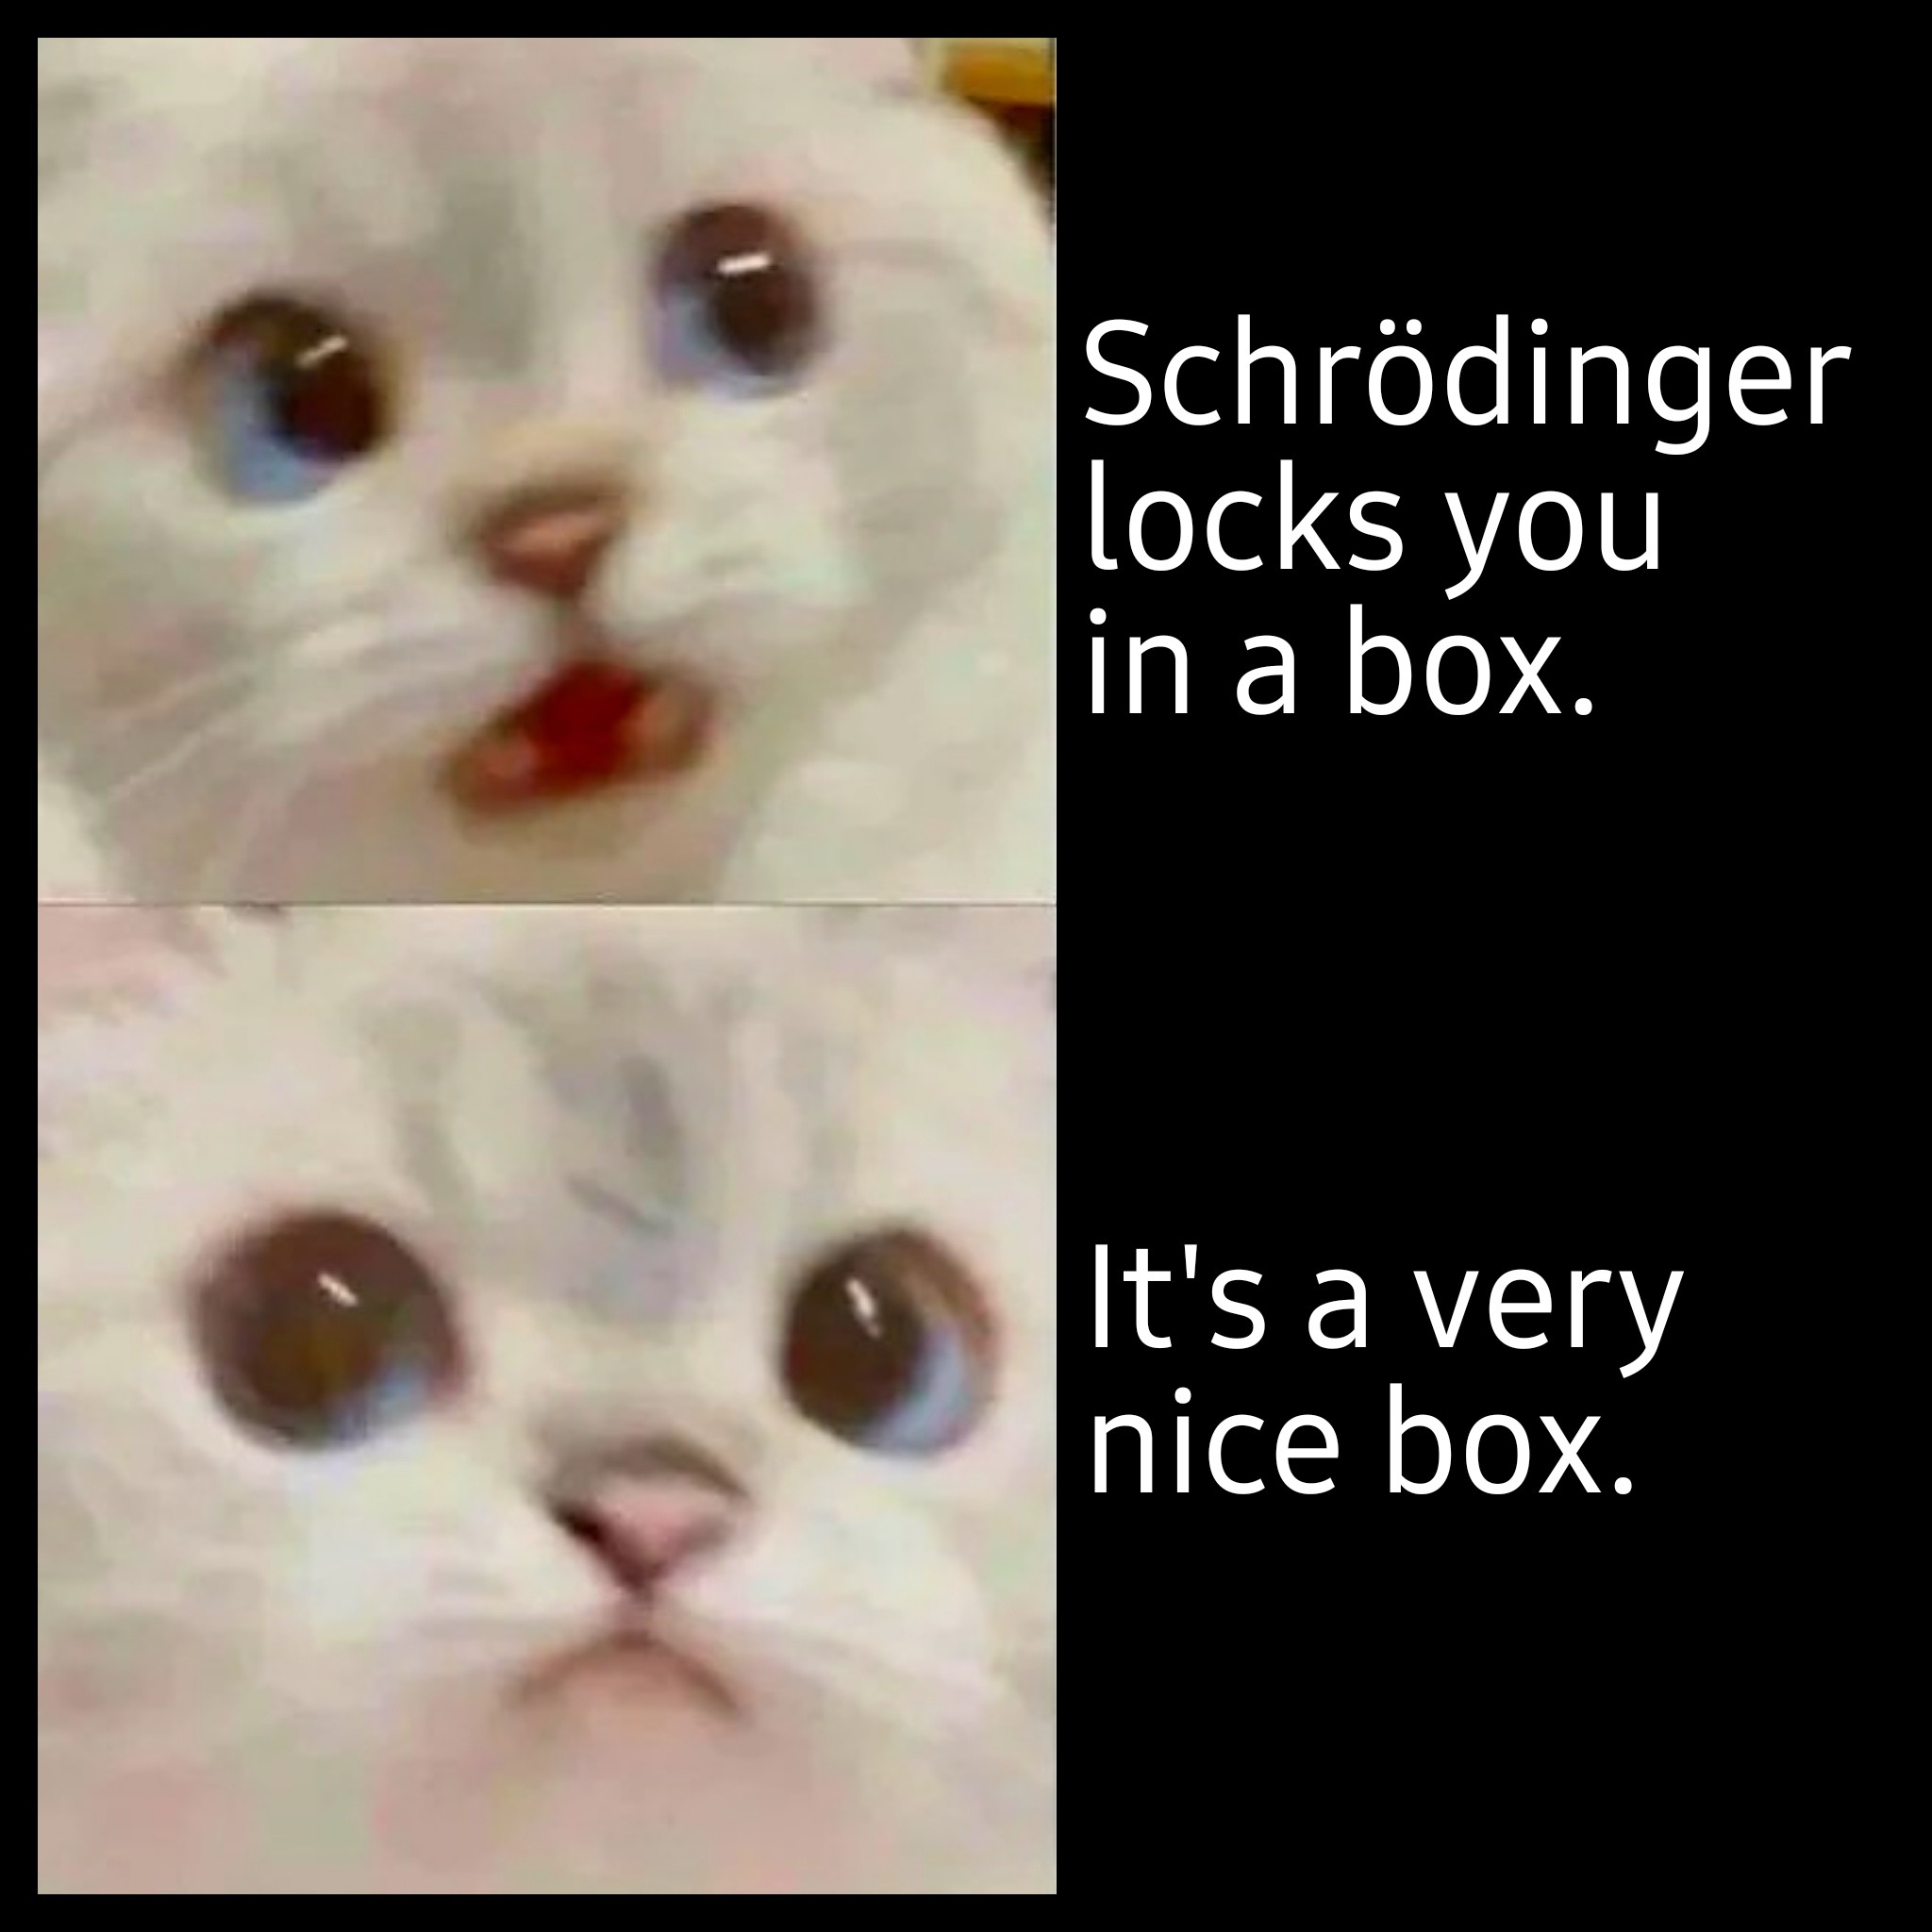 dank memes - schrodinger cat meme - Schrdinger locks you in a box. It's a very nice box.